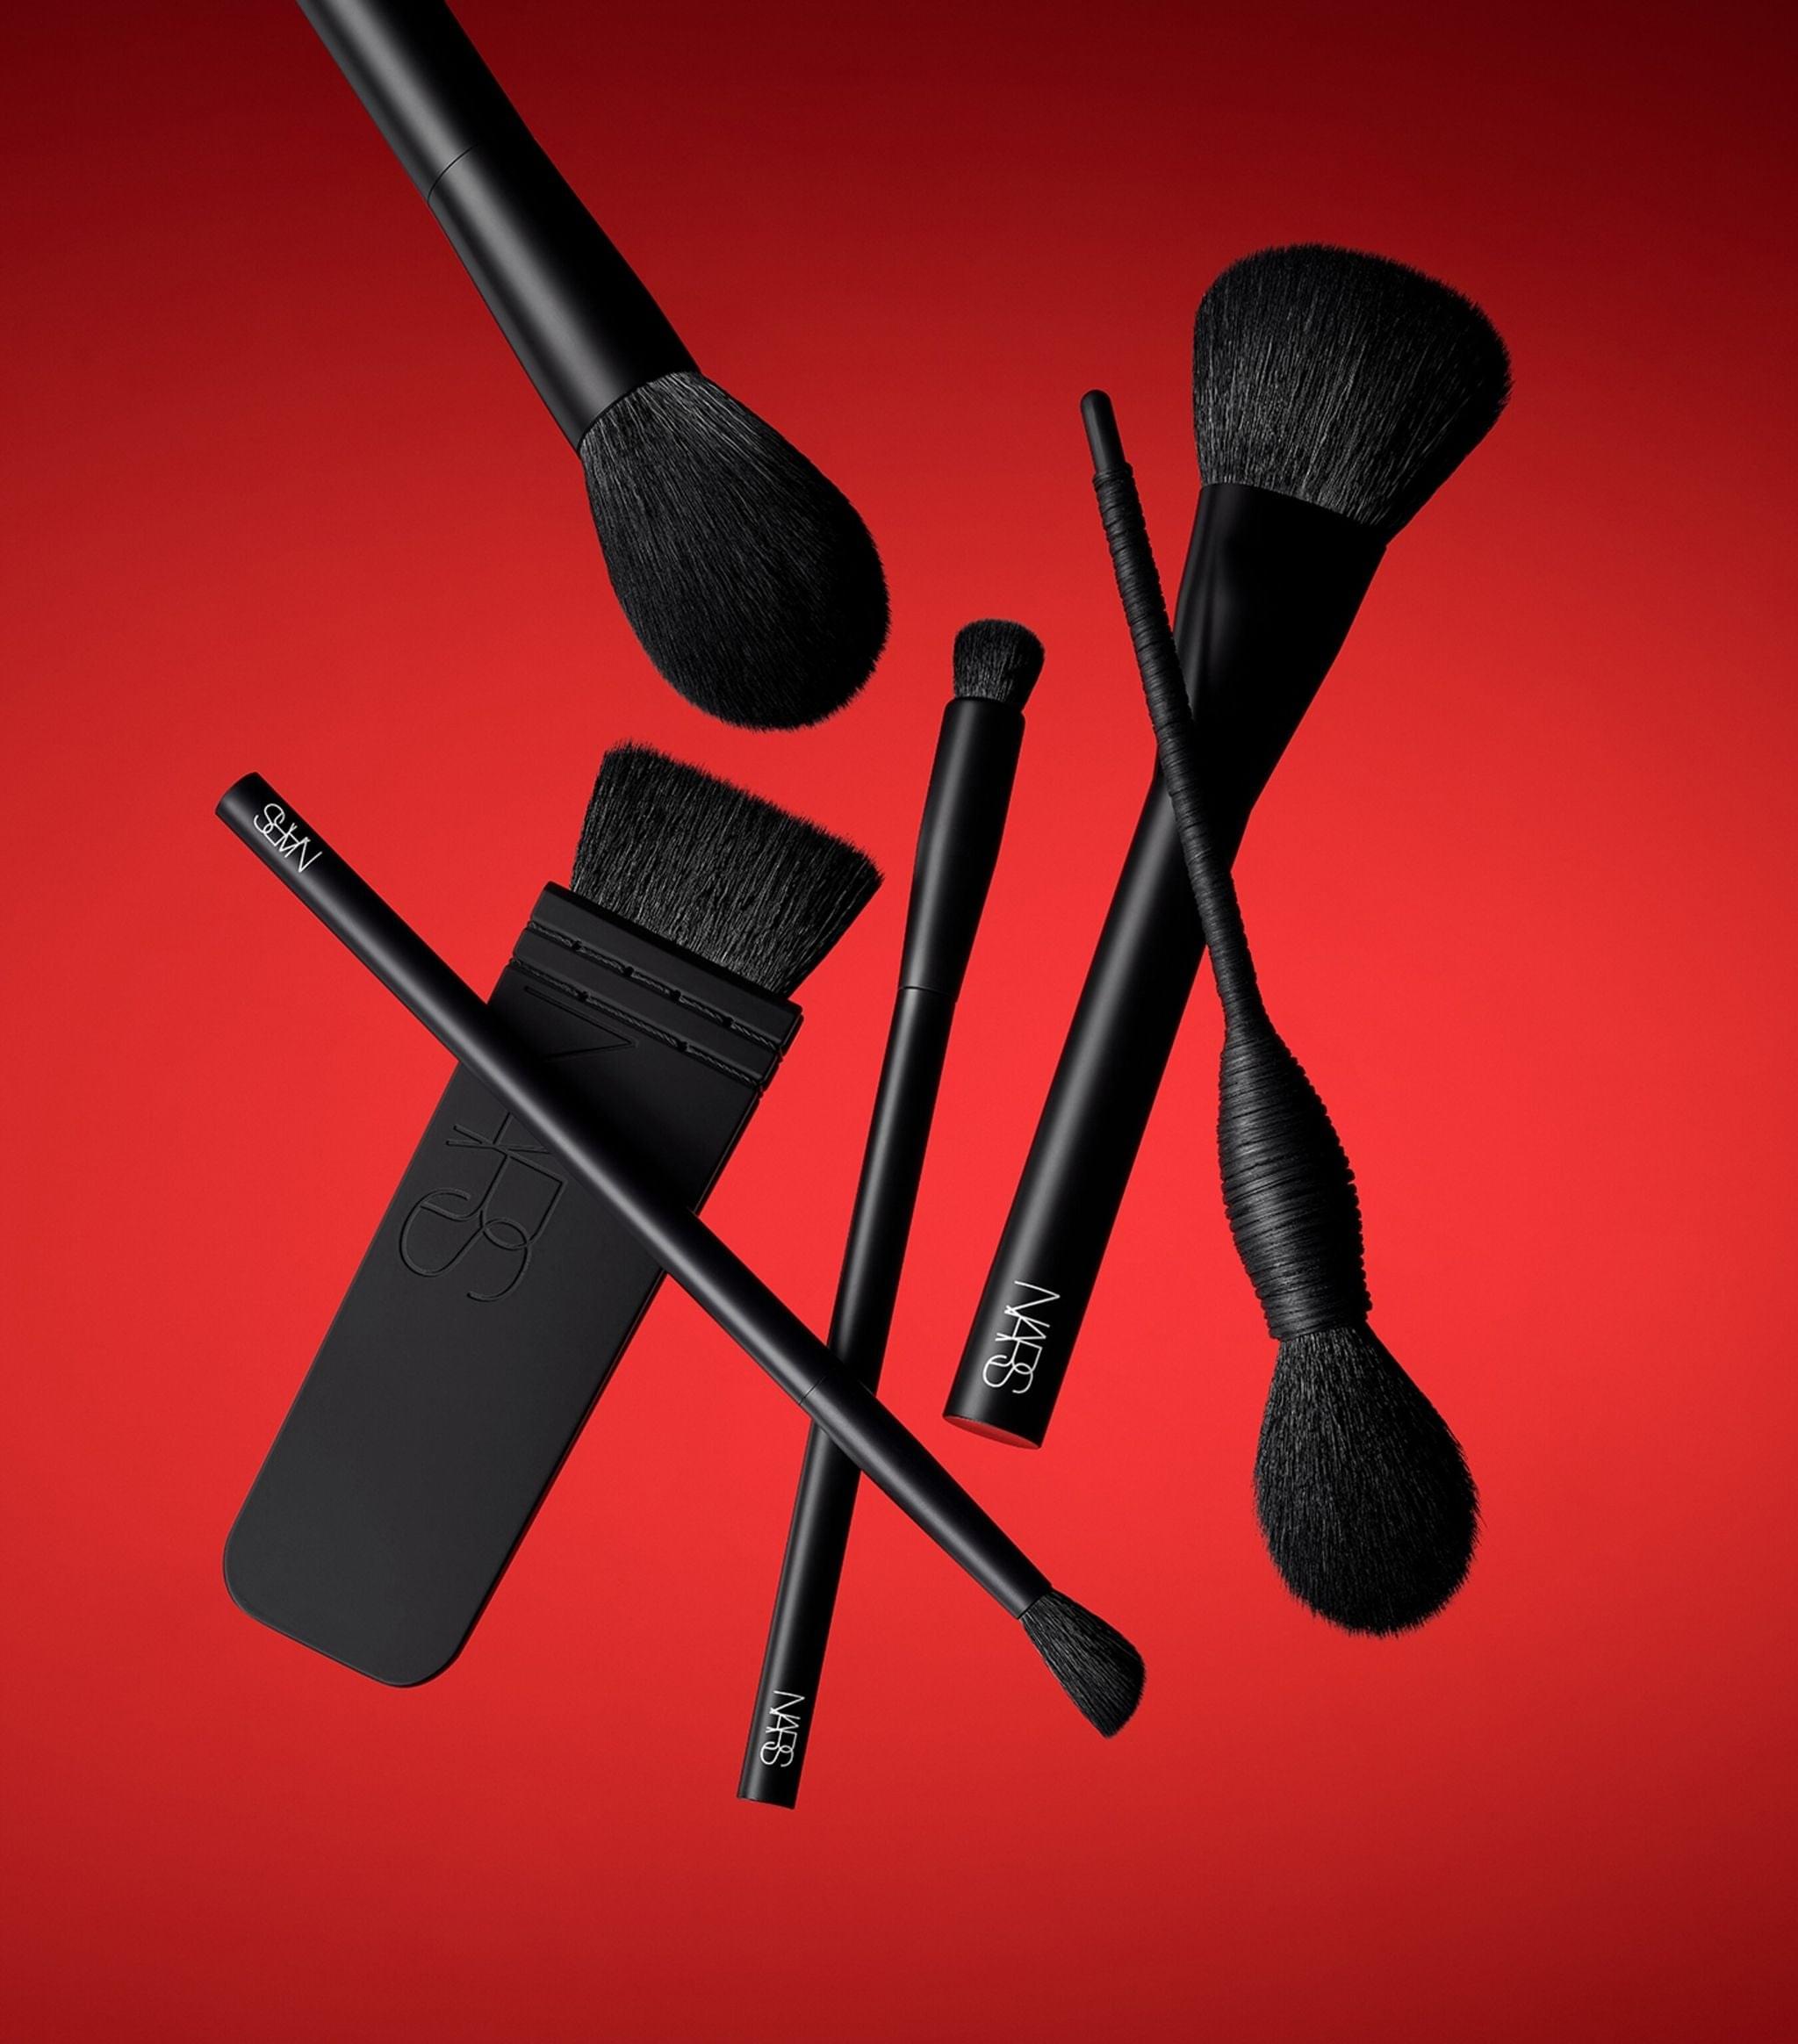 #22 Blending Brush Make Up & Beauty Accessories Harrods   